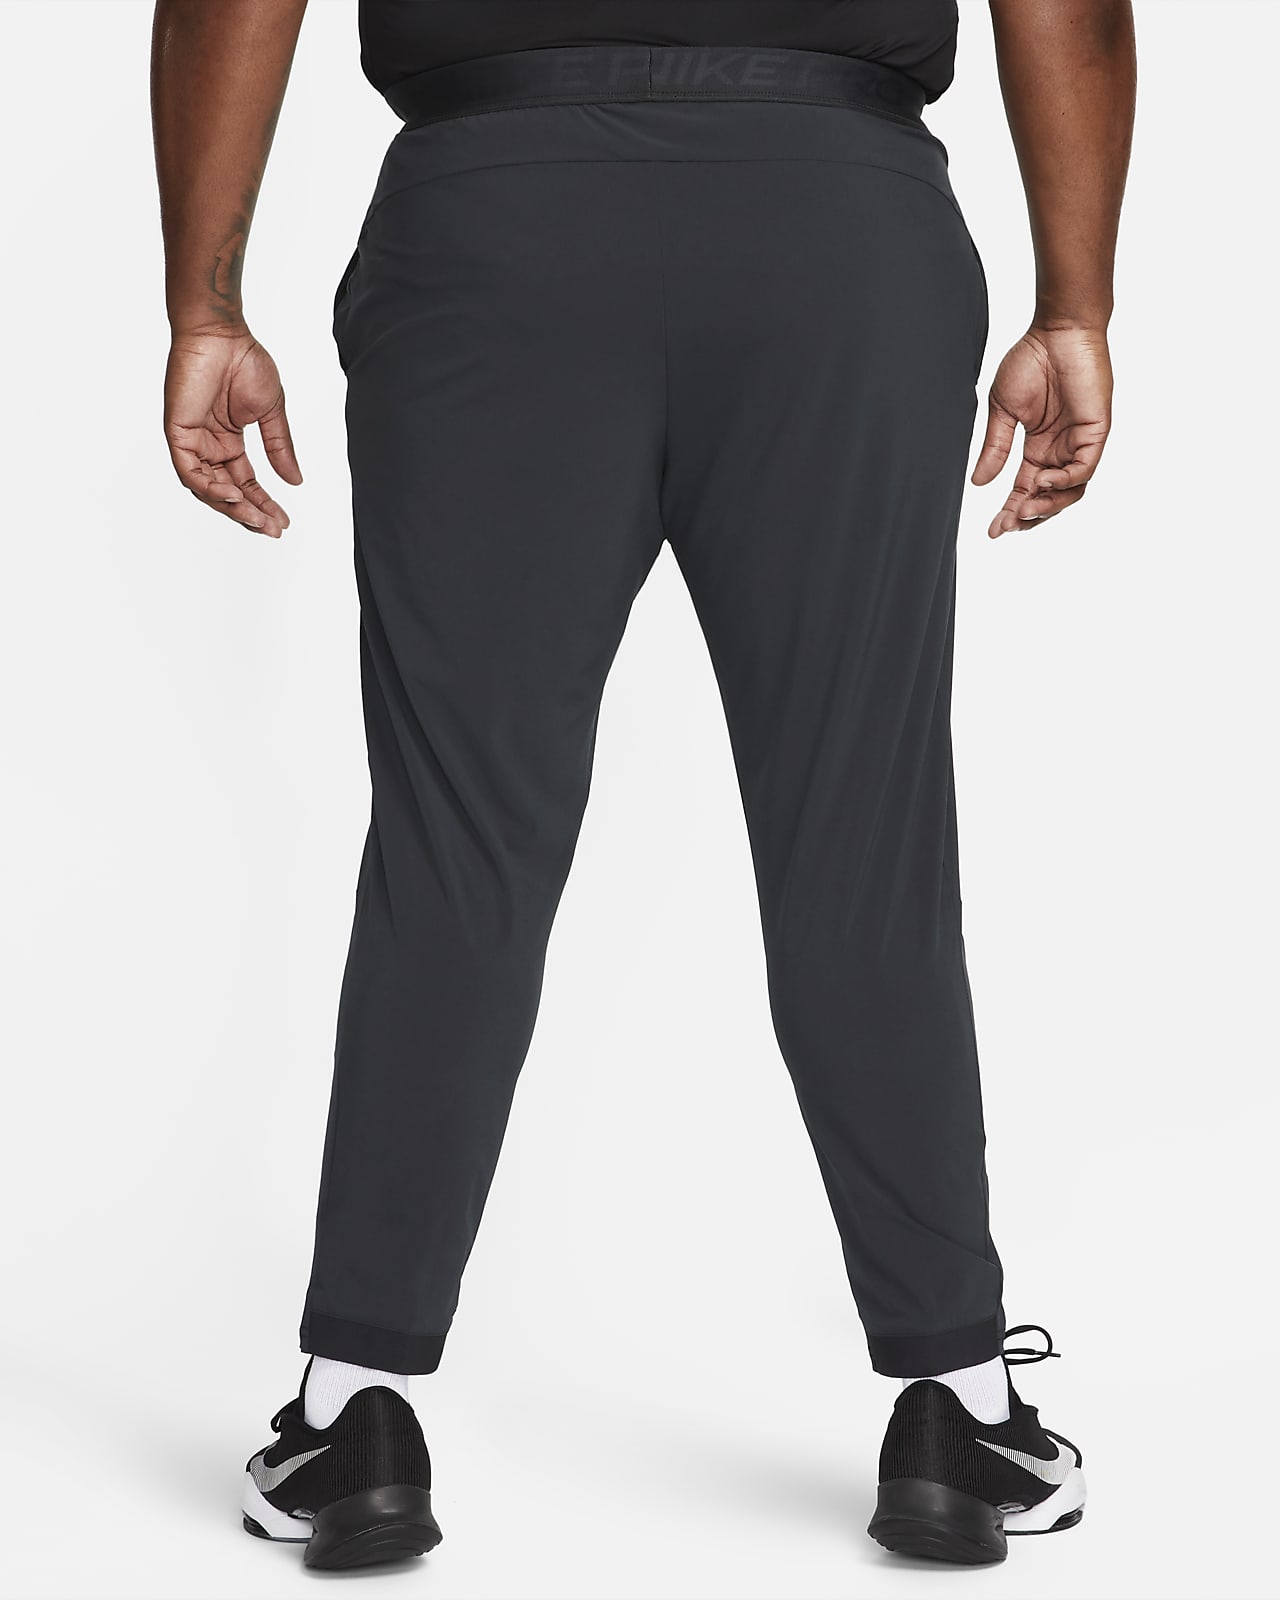 Nike Black Active Pants Size XL - 39% off